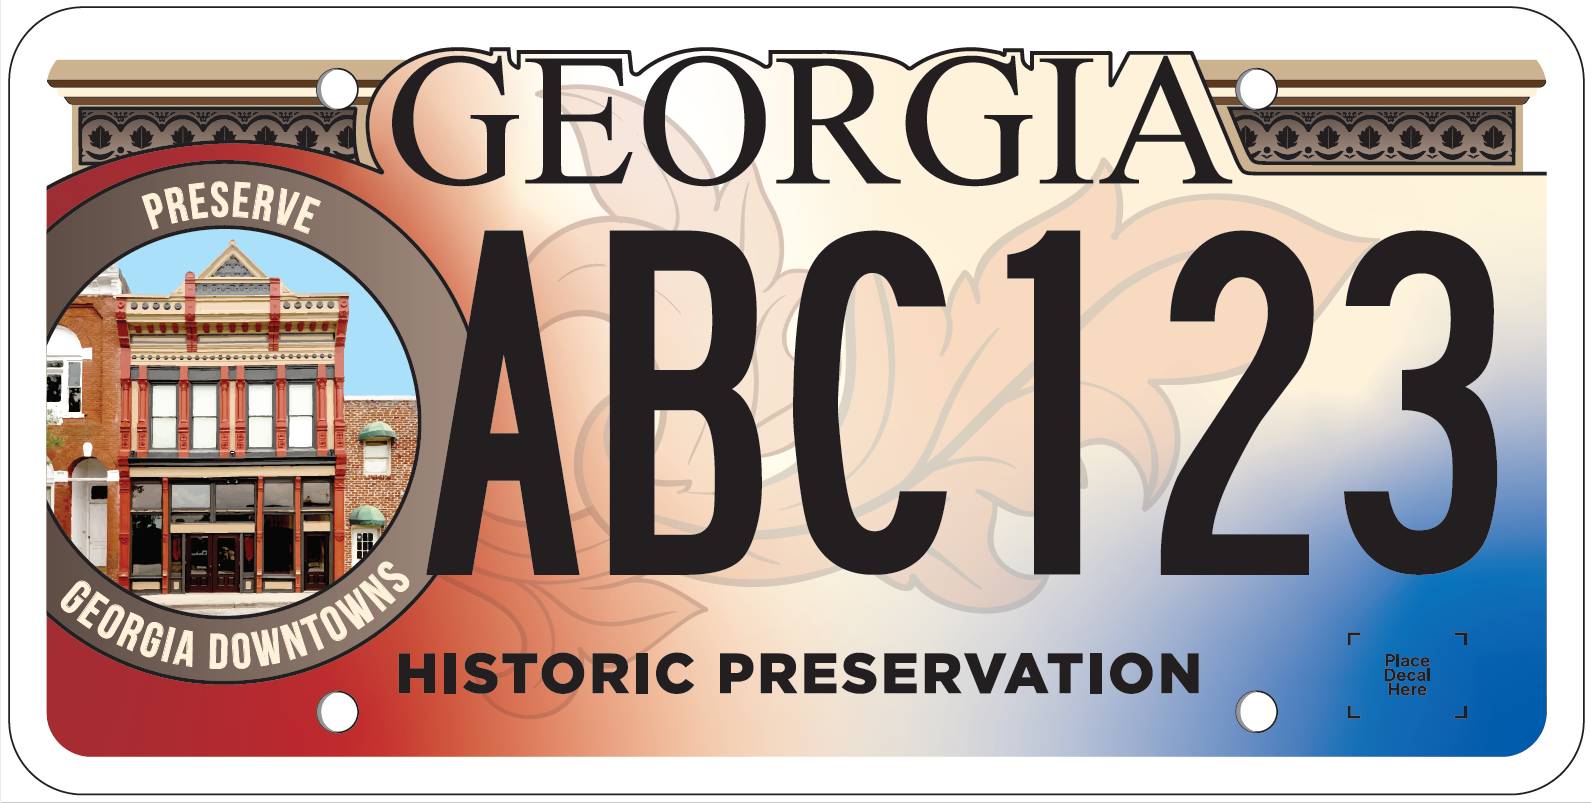 Georgia’s Historic Preservation Tag